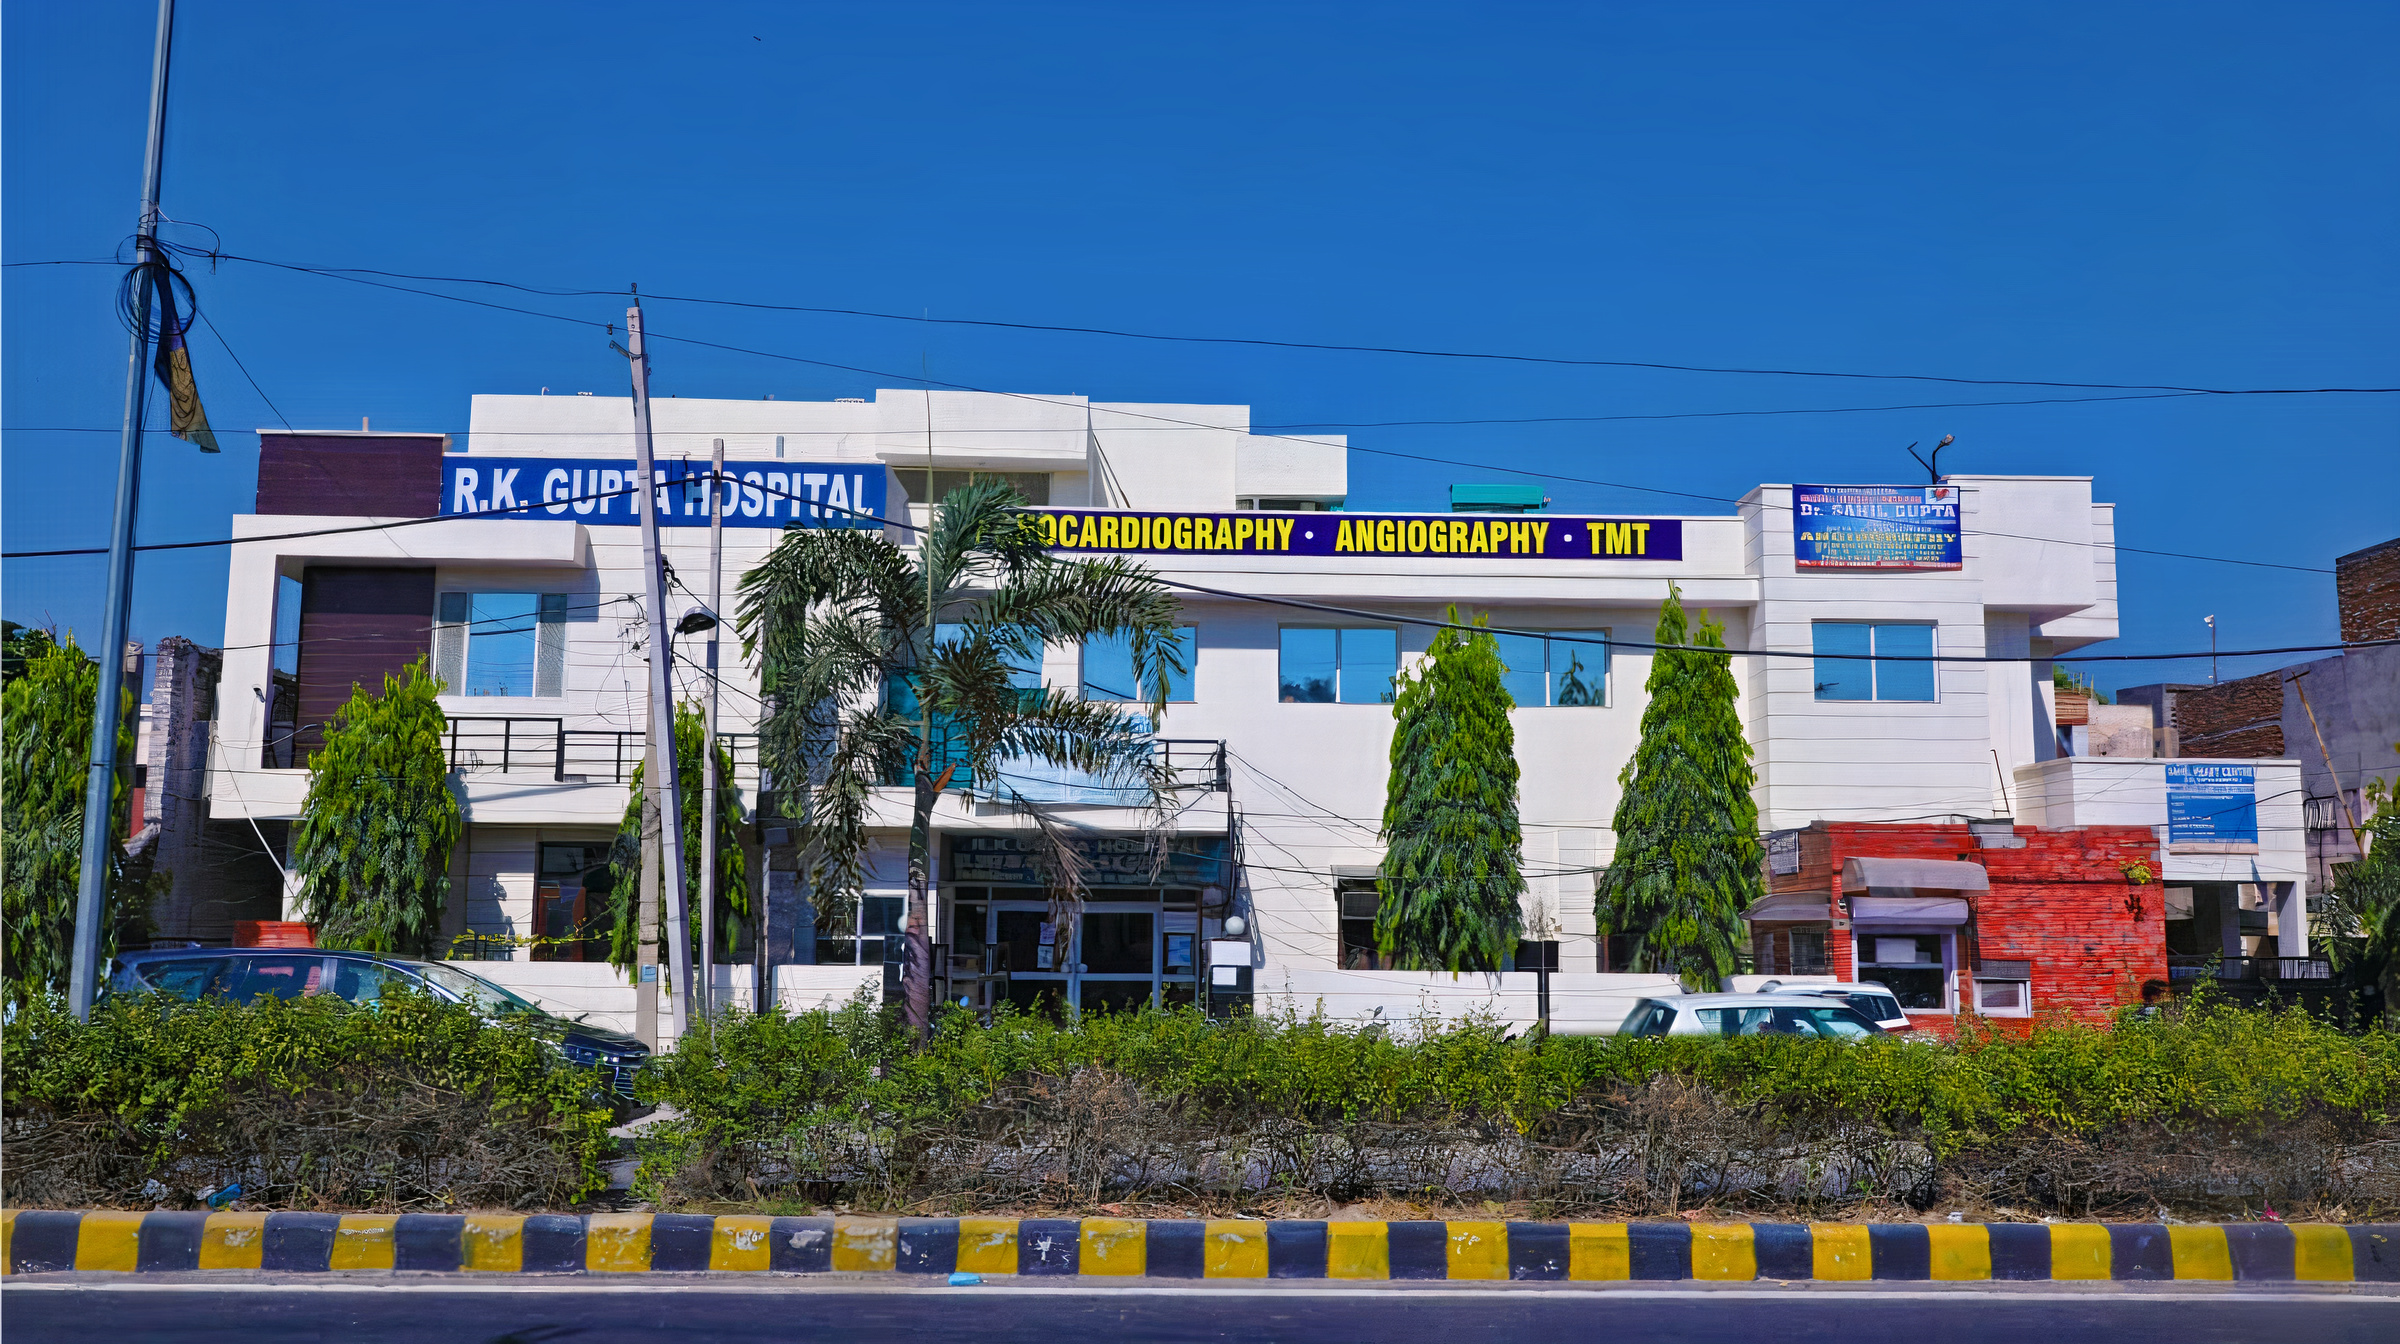 R. K. Gupta Hospital